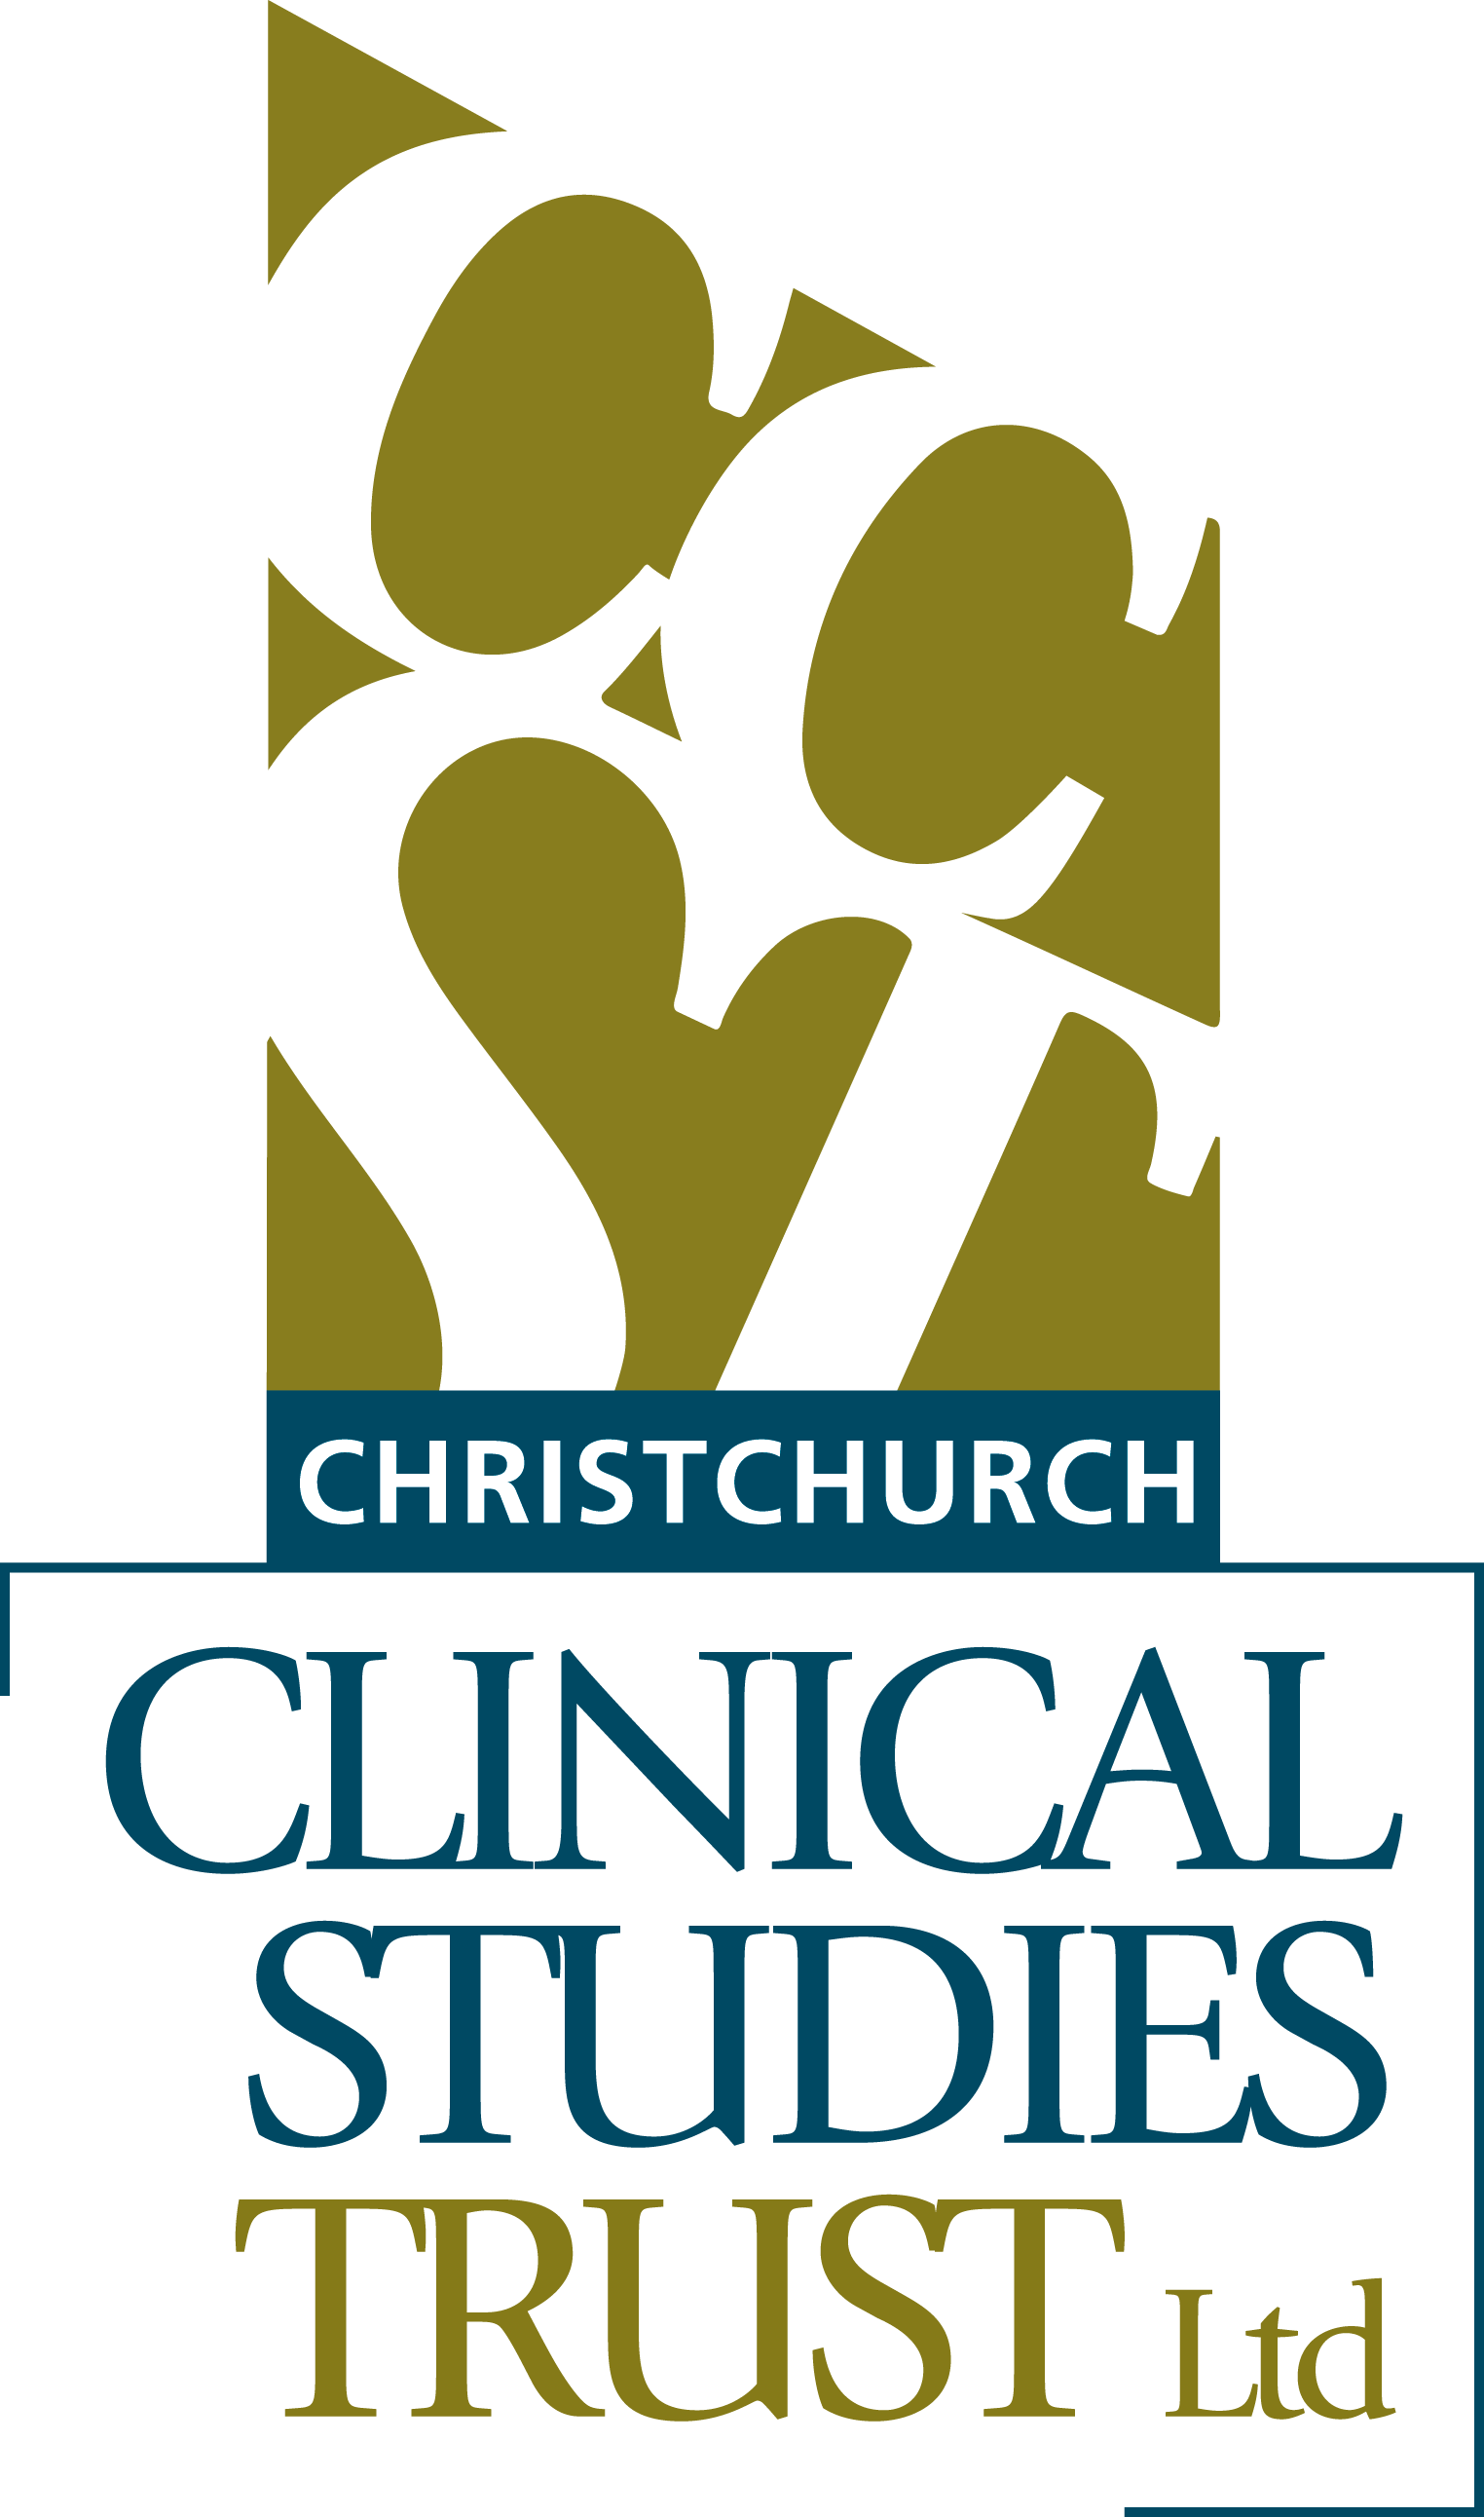 Christchurch Clinical Studies Trust